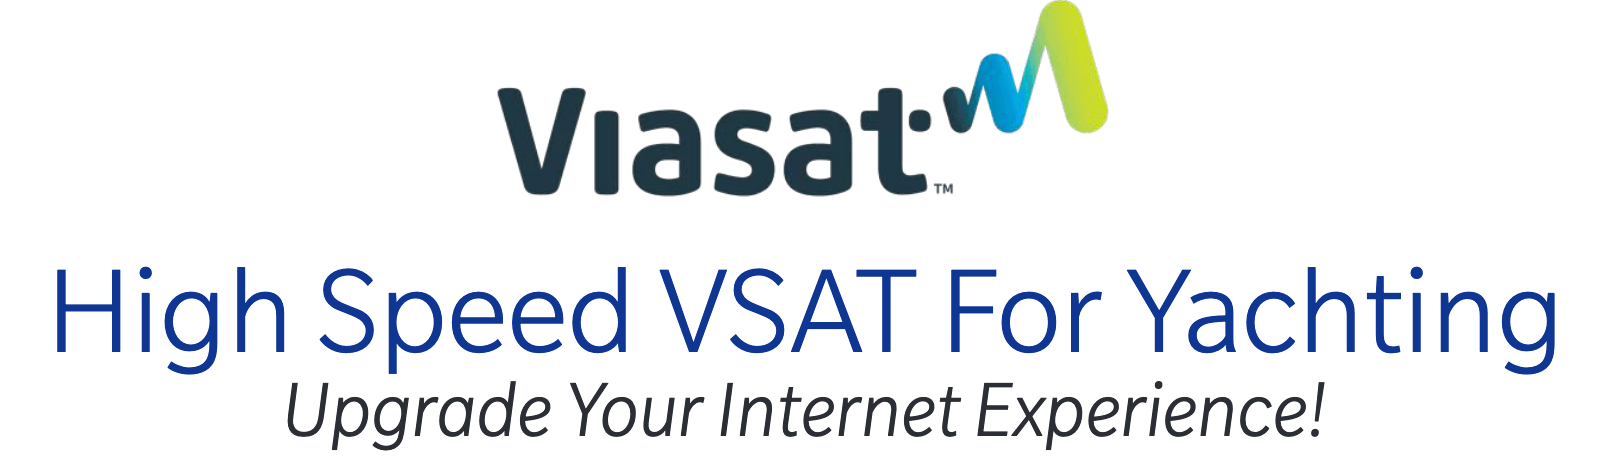 Viasat Highspeed Internet